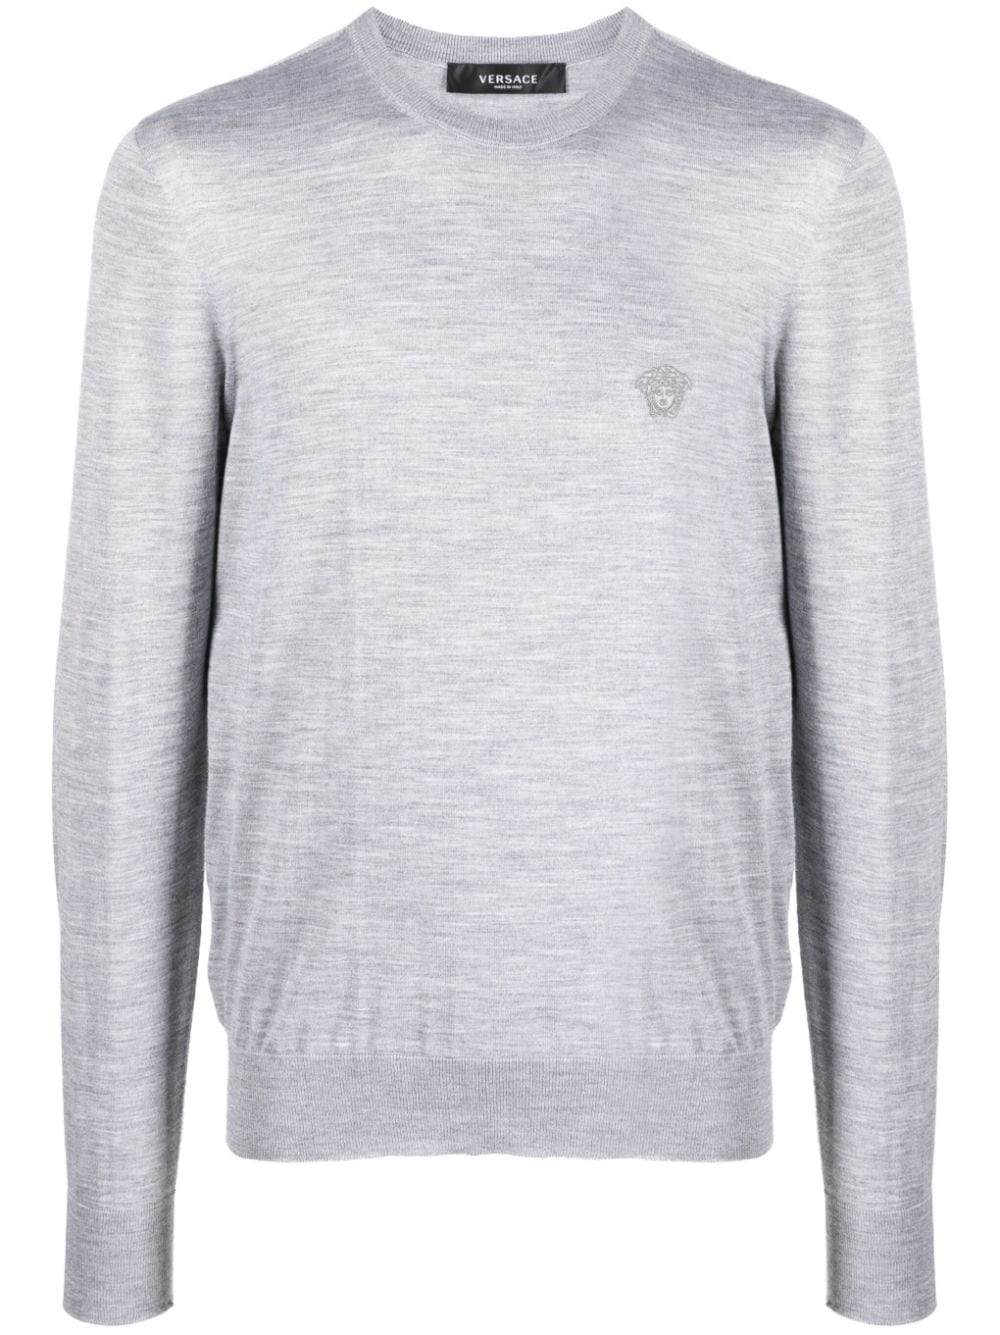 Versace logo-embroidered knitted sweatshirt - Grey